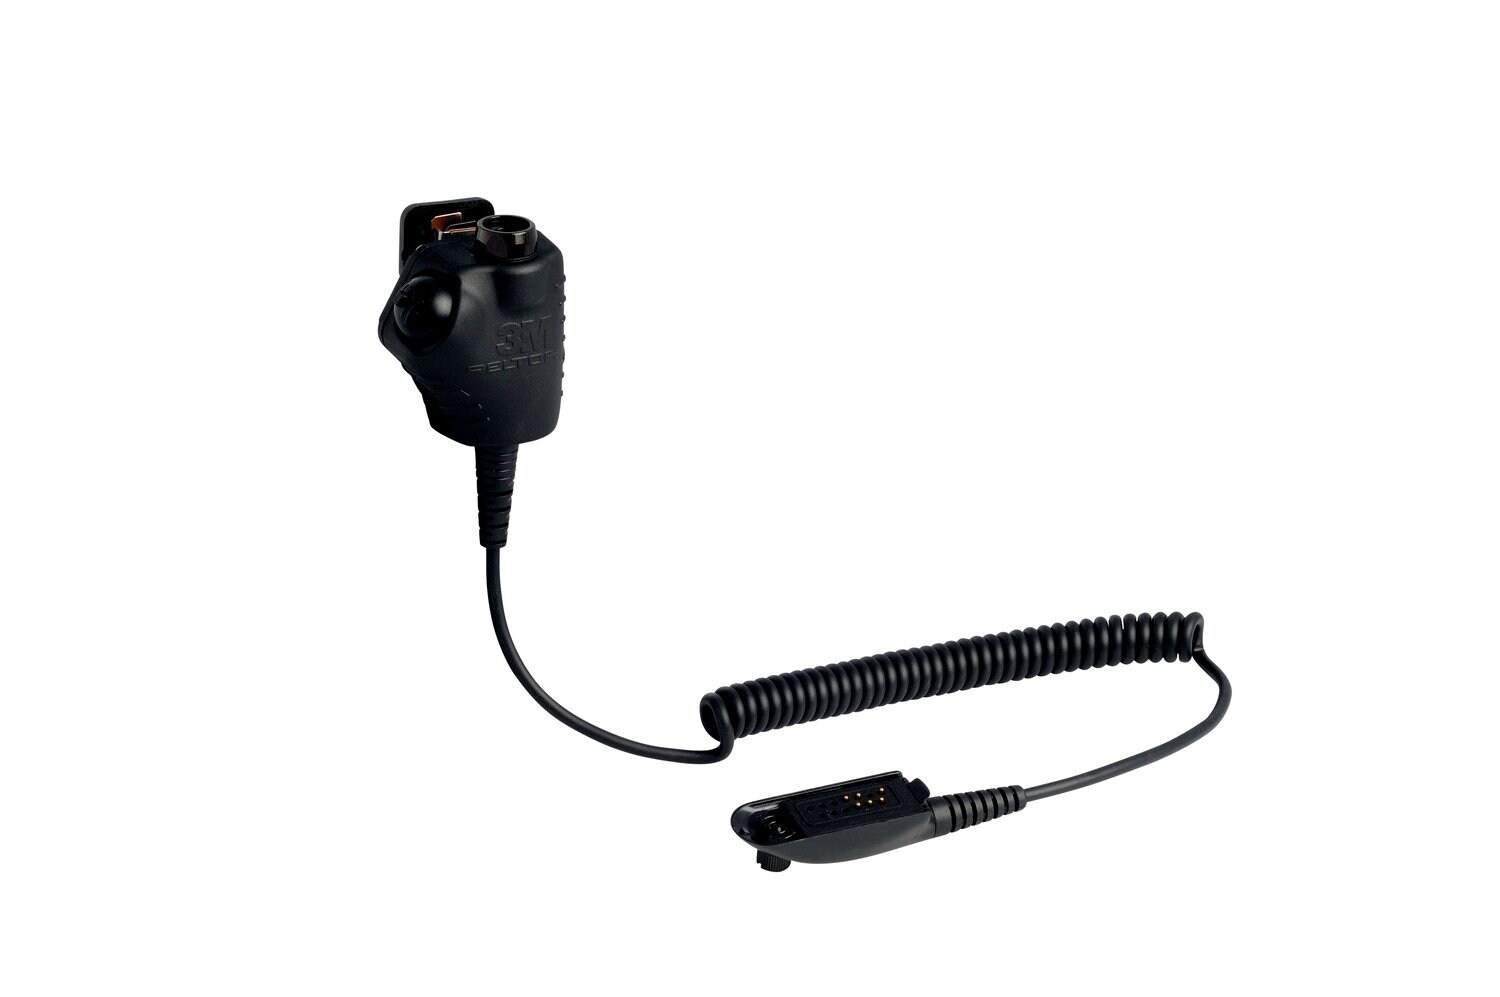 7100150832 - 3M PELTOR FL4030-02, NATO Wired Small PTT Adapter - Motorola
GP320/340/360/380/640/680